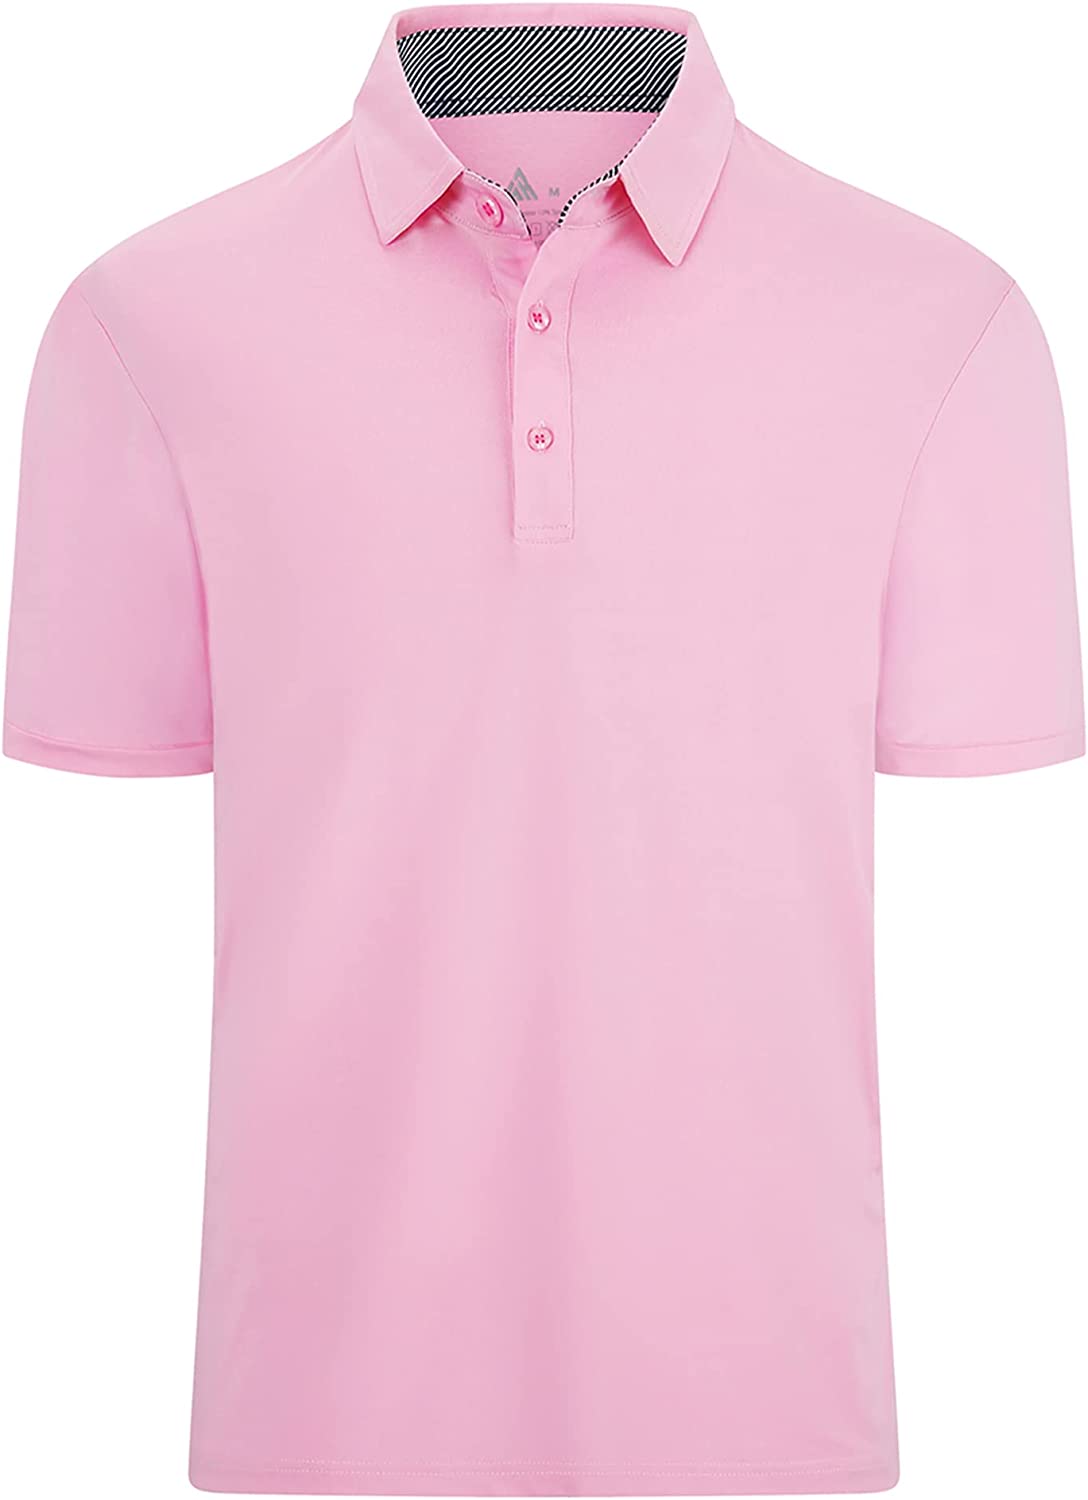 V VALANCH Mens Golf Polo Shirts Long/Short Sleeve Moisture Wicking  Performance S eBay